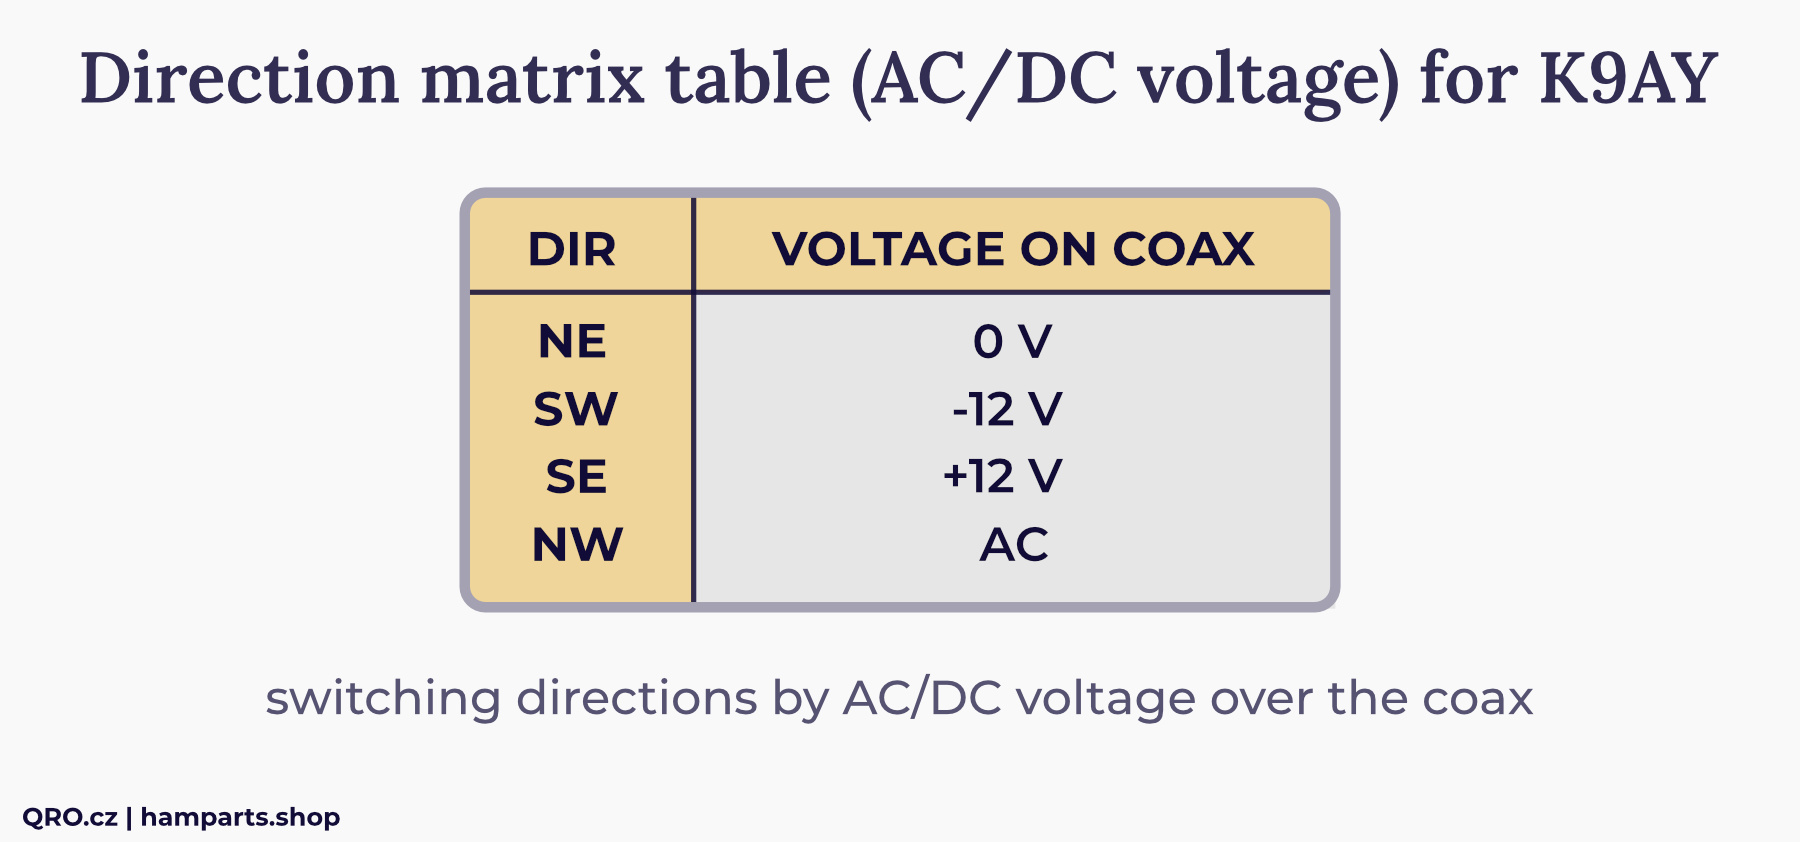 k9ay acdc direction matrix table qro.cz hamparts.shop